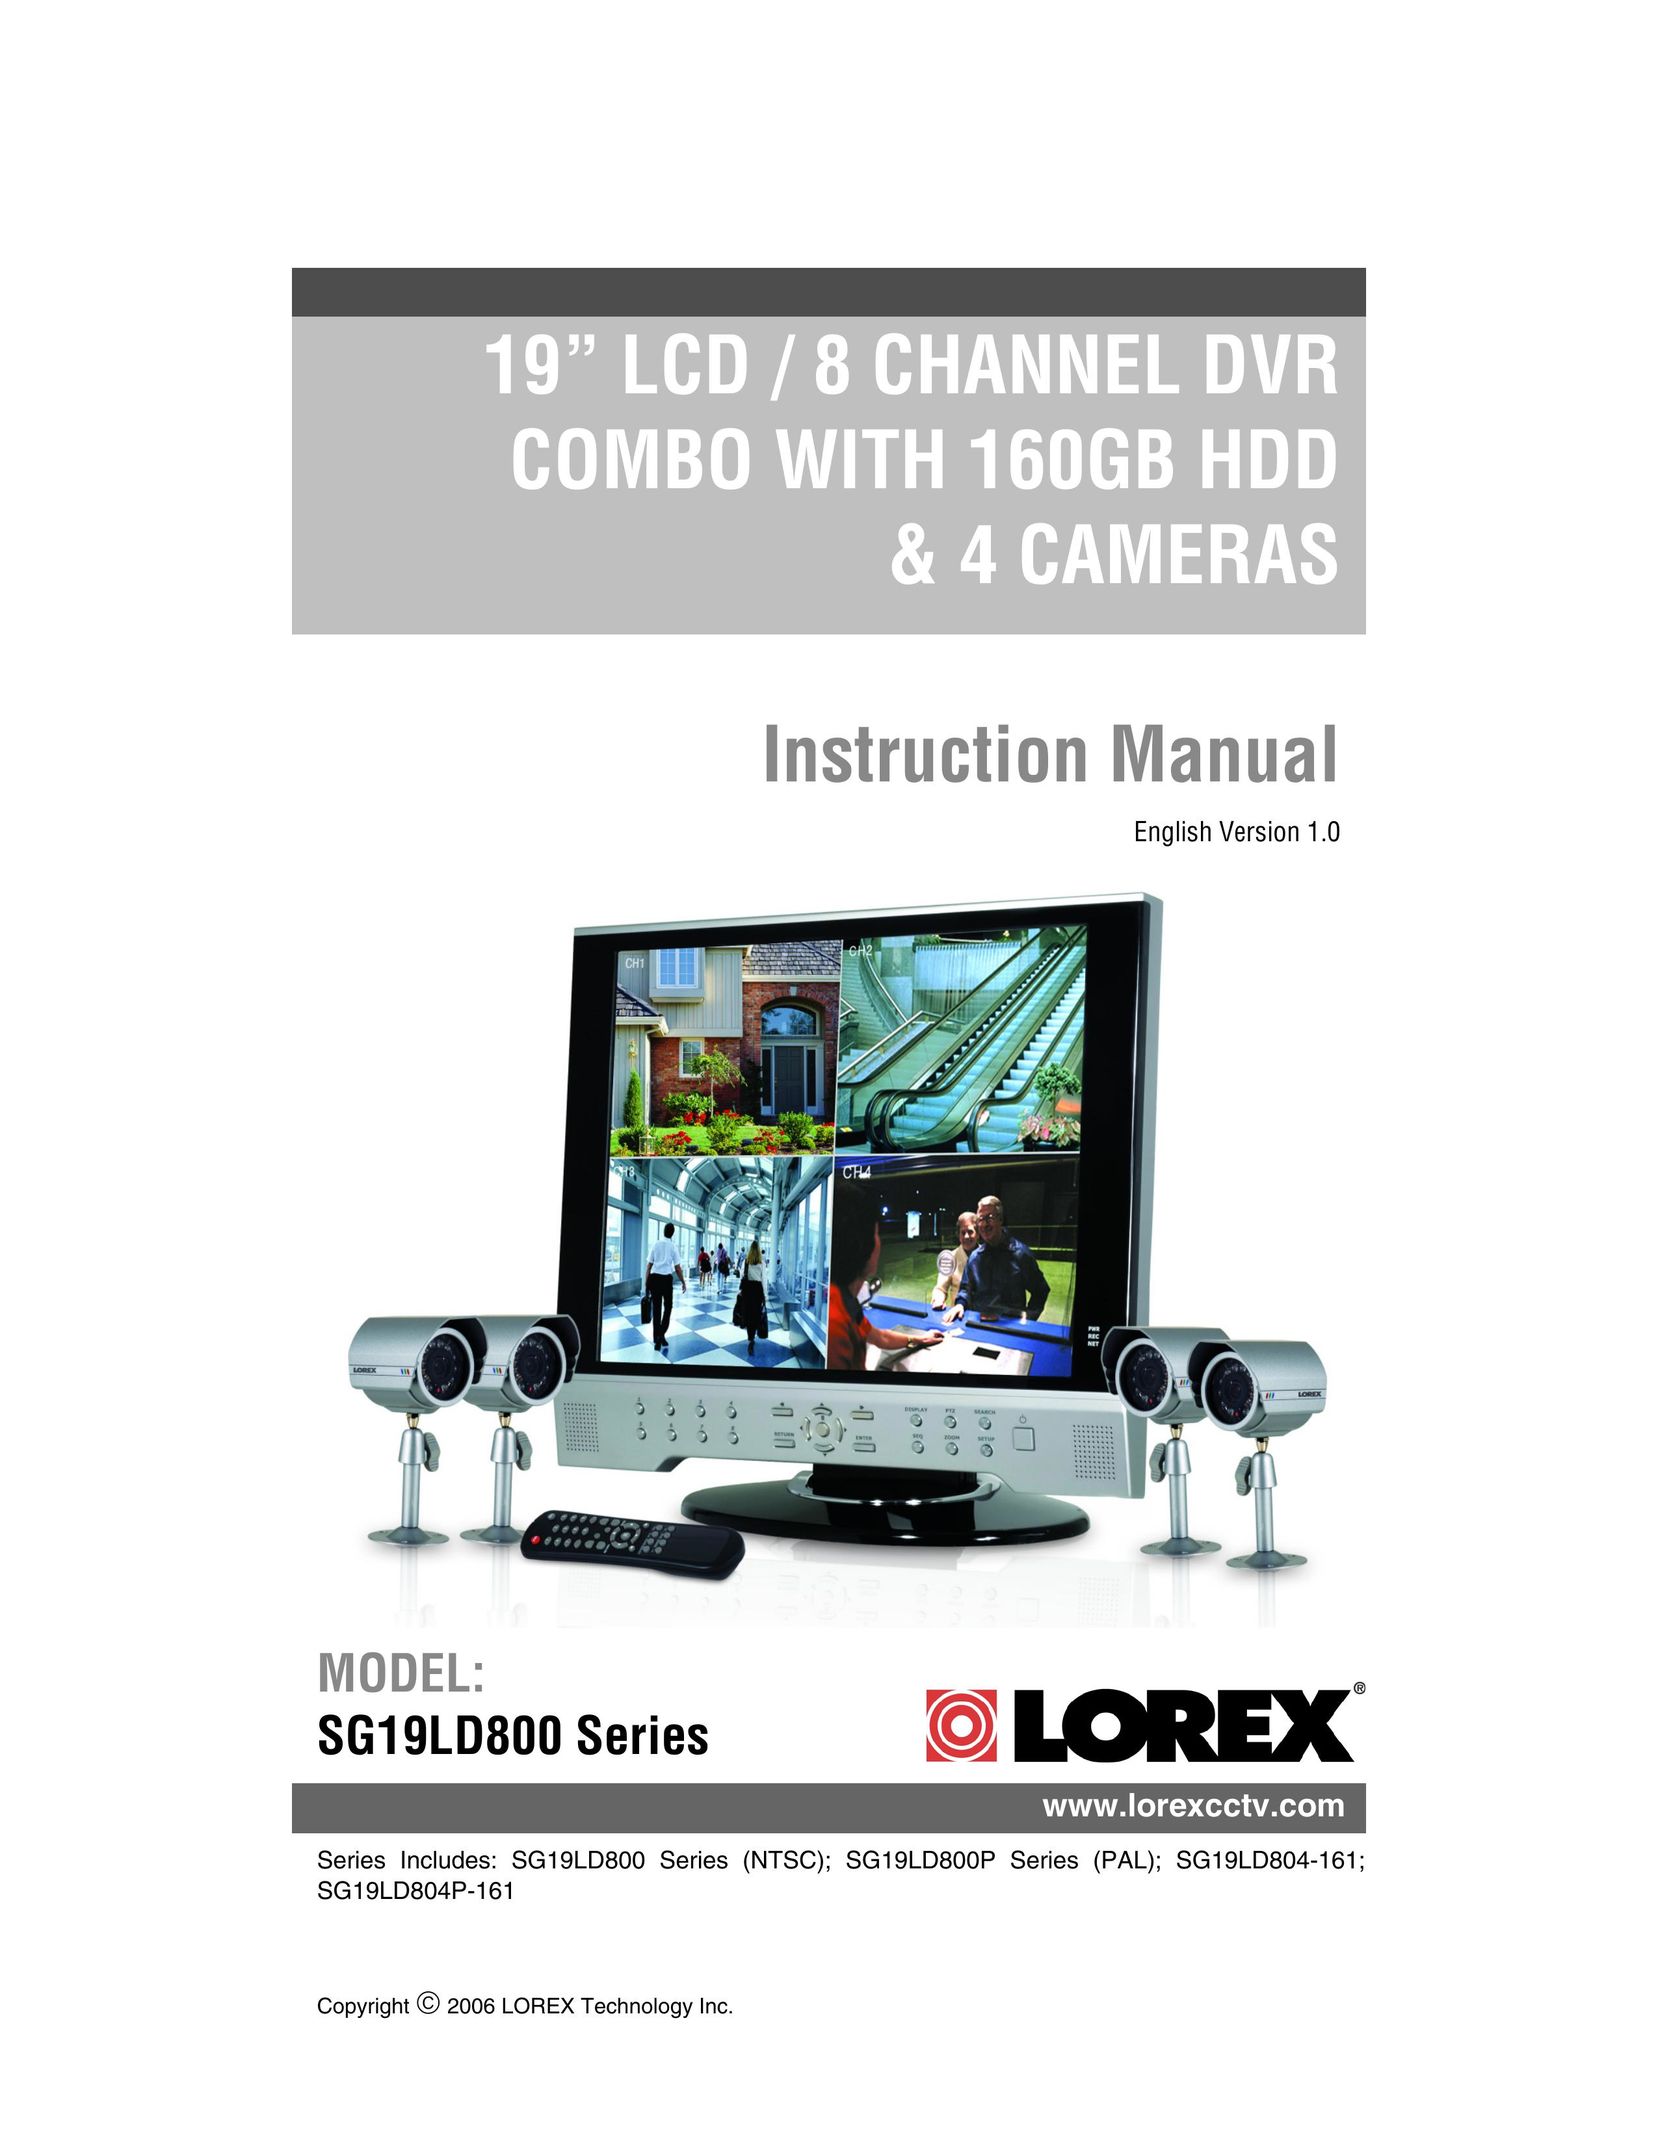 LOREX Technology SG19LD800 Series TV DVD Combo User Manual